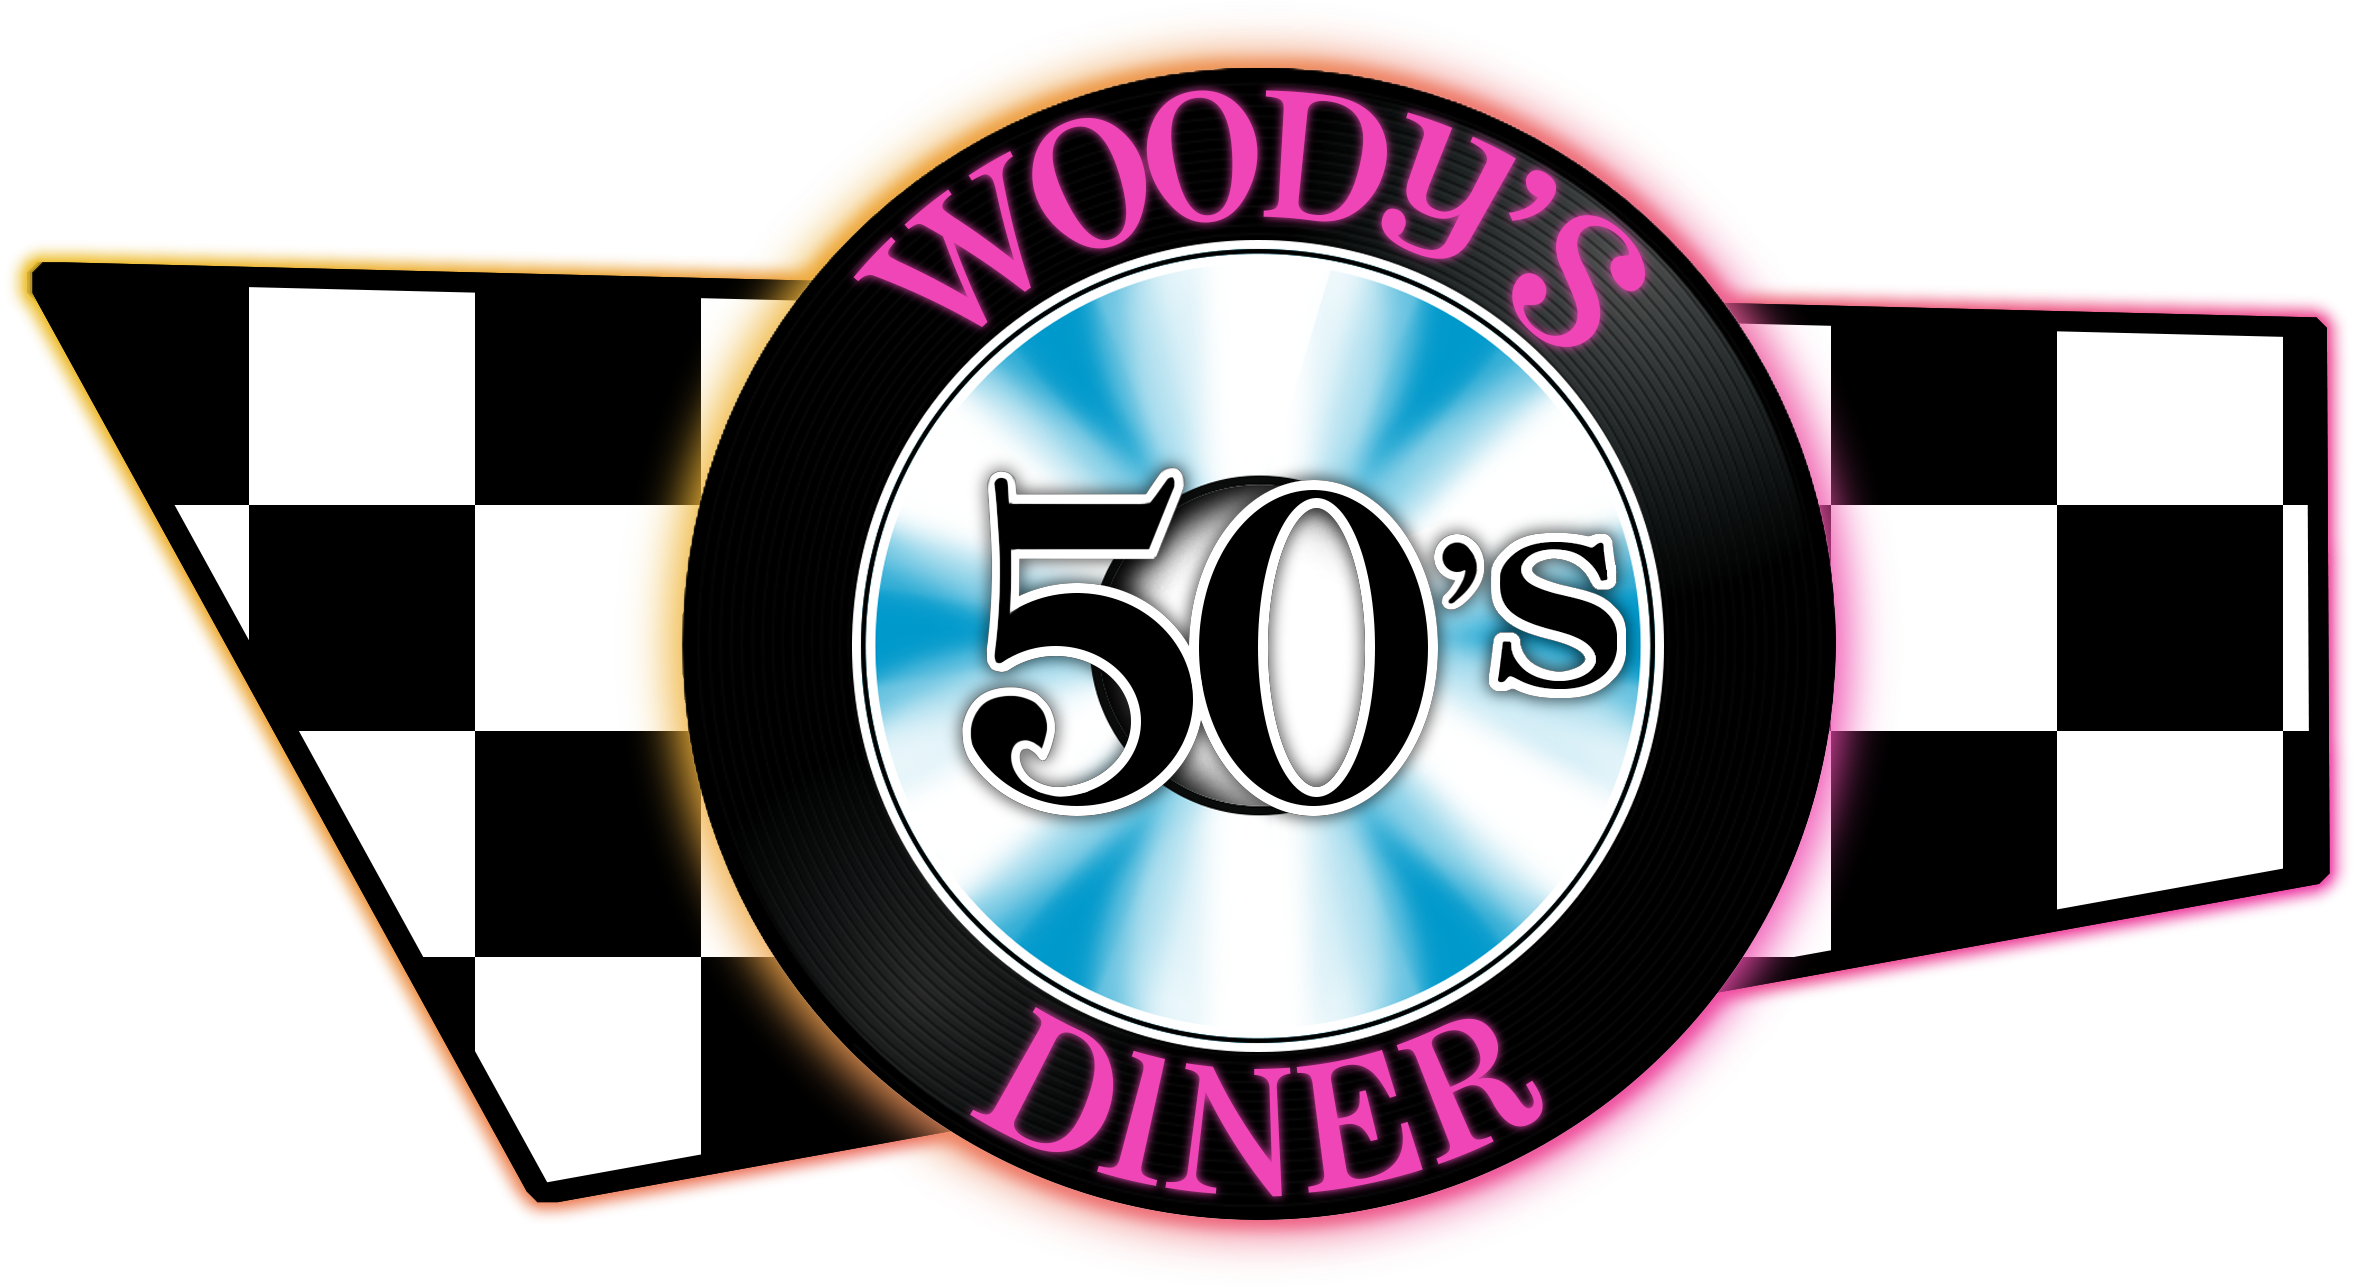 Woody's 50's Diner - Graphic Design (2416x1286)